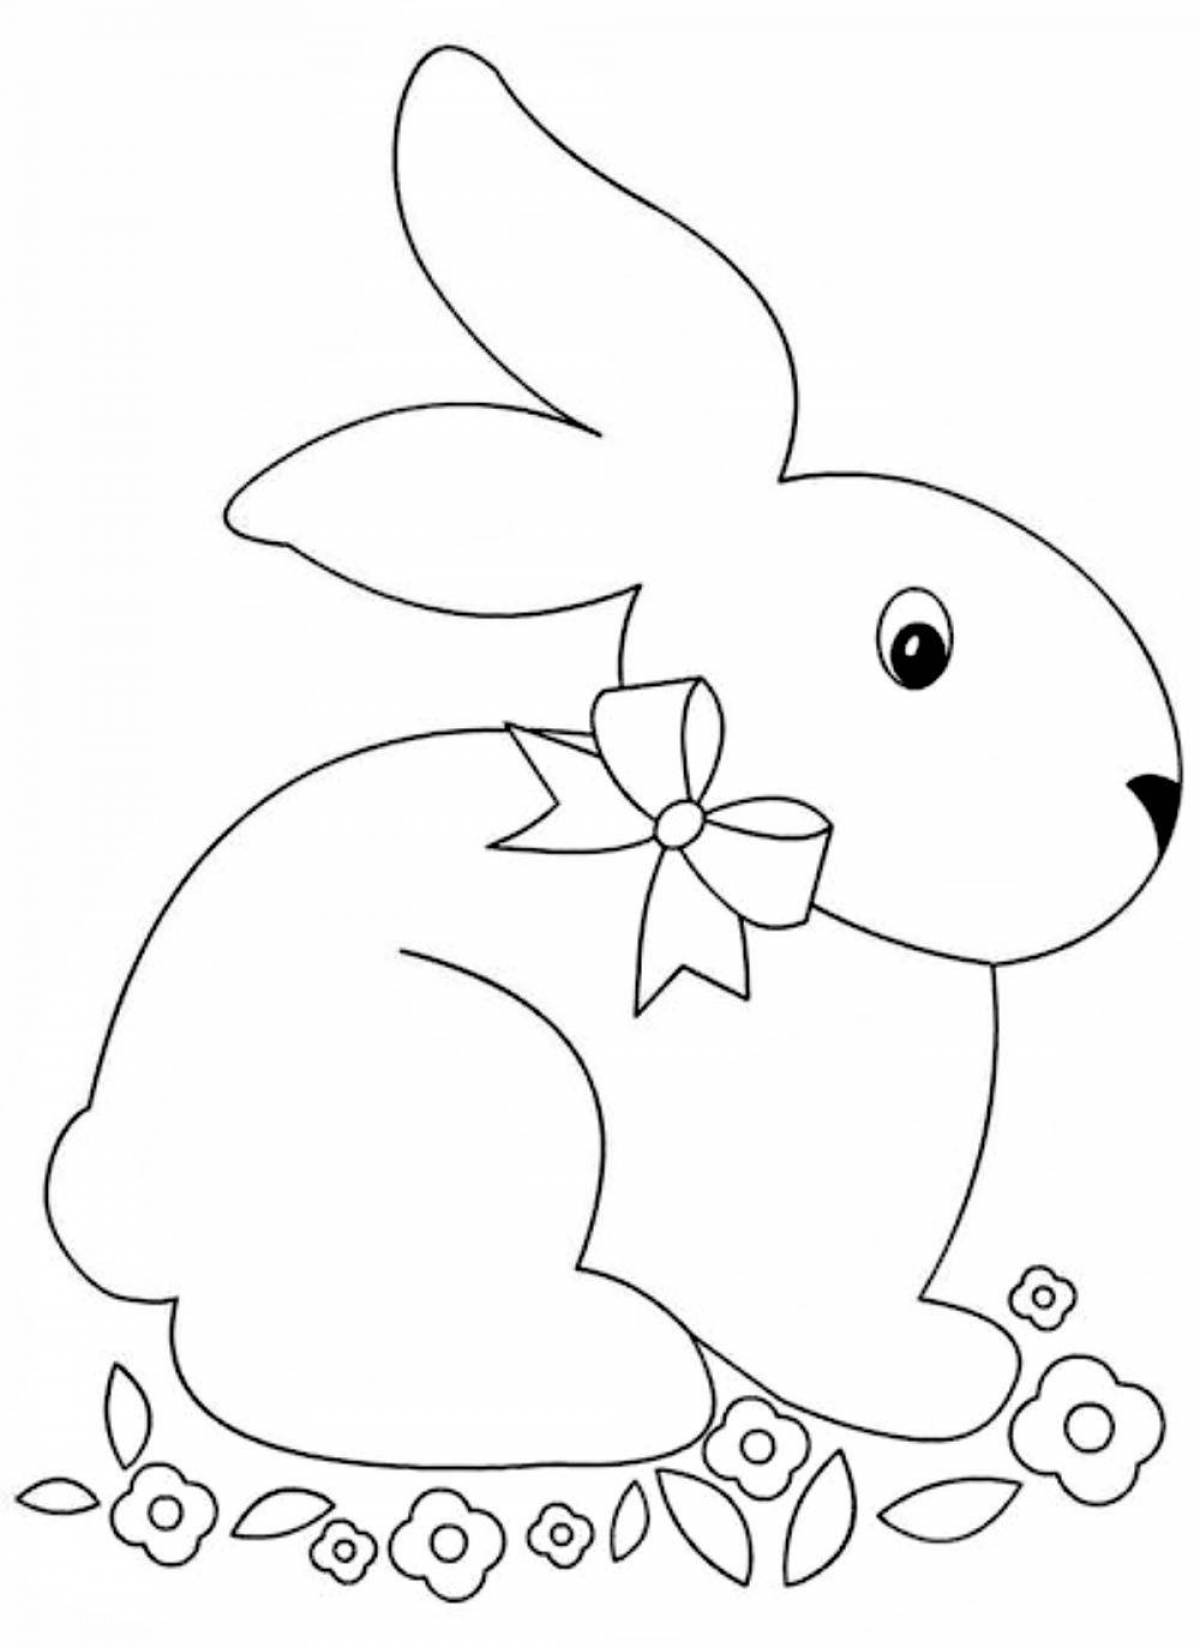 Joyful rabbit coloring page template